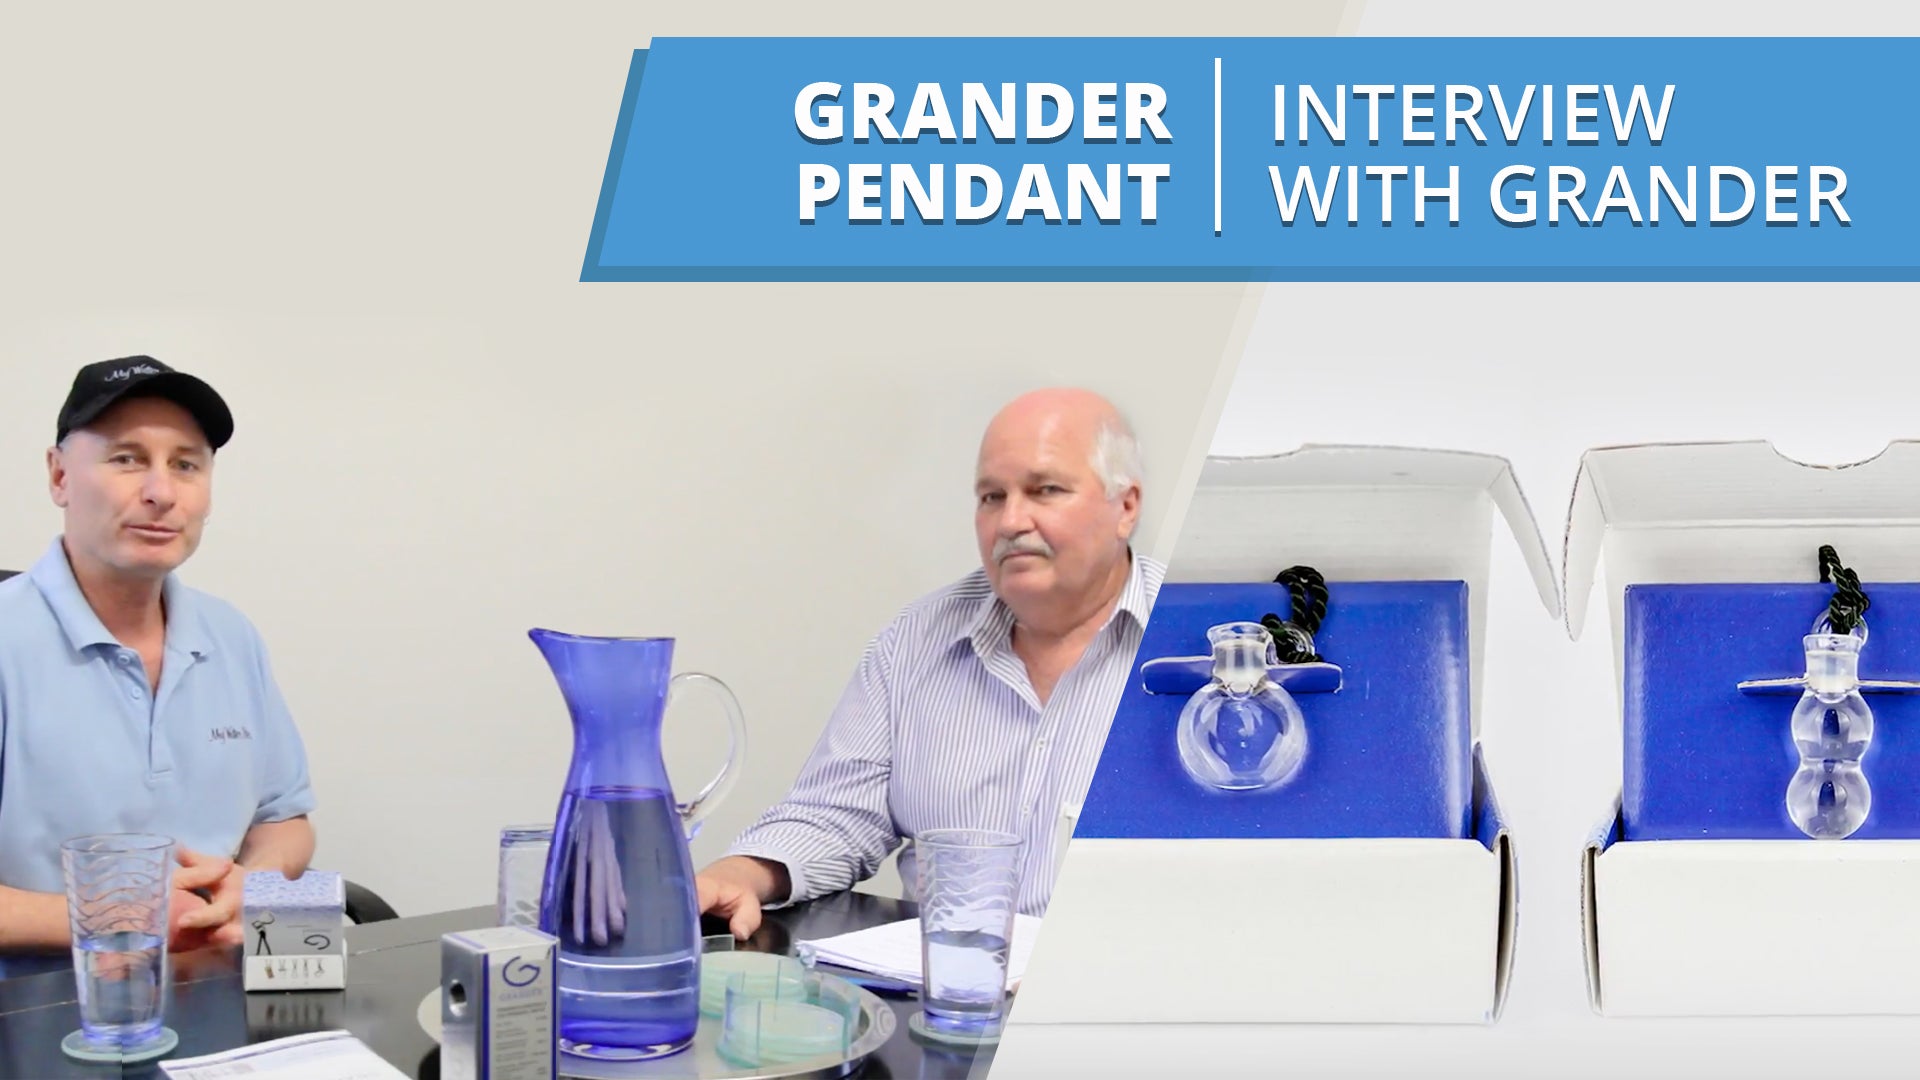 [VIDEO] Grander Pendant - Interview with Wayne from Grander